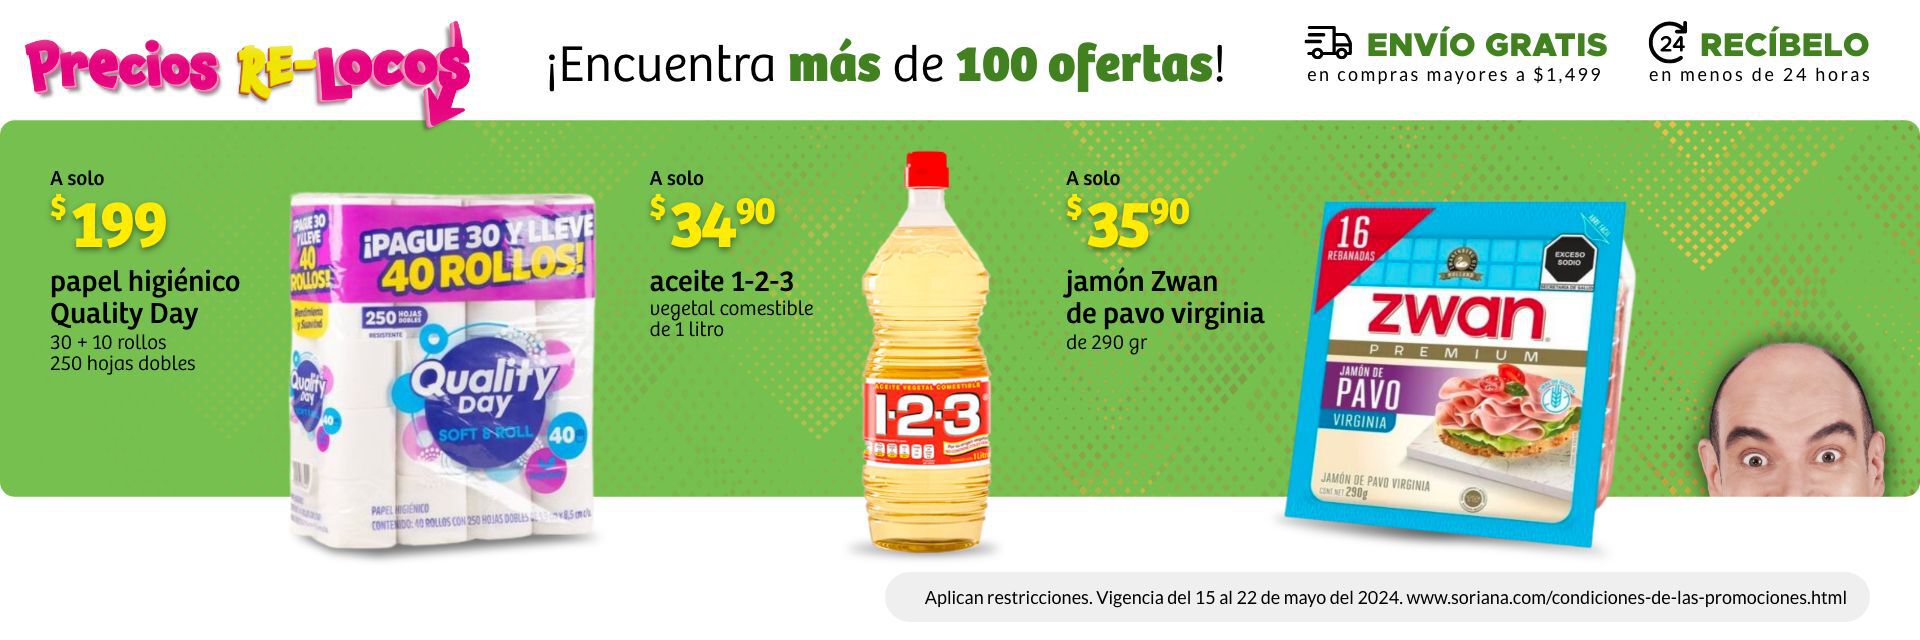 Aceite Vegetal 1-2-3 1 lt $34.90